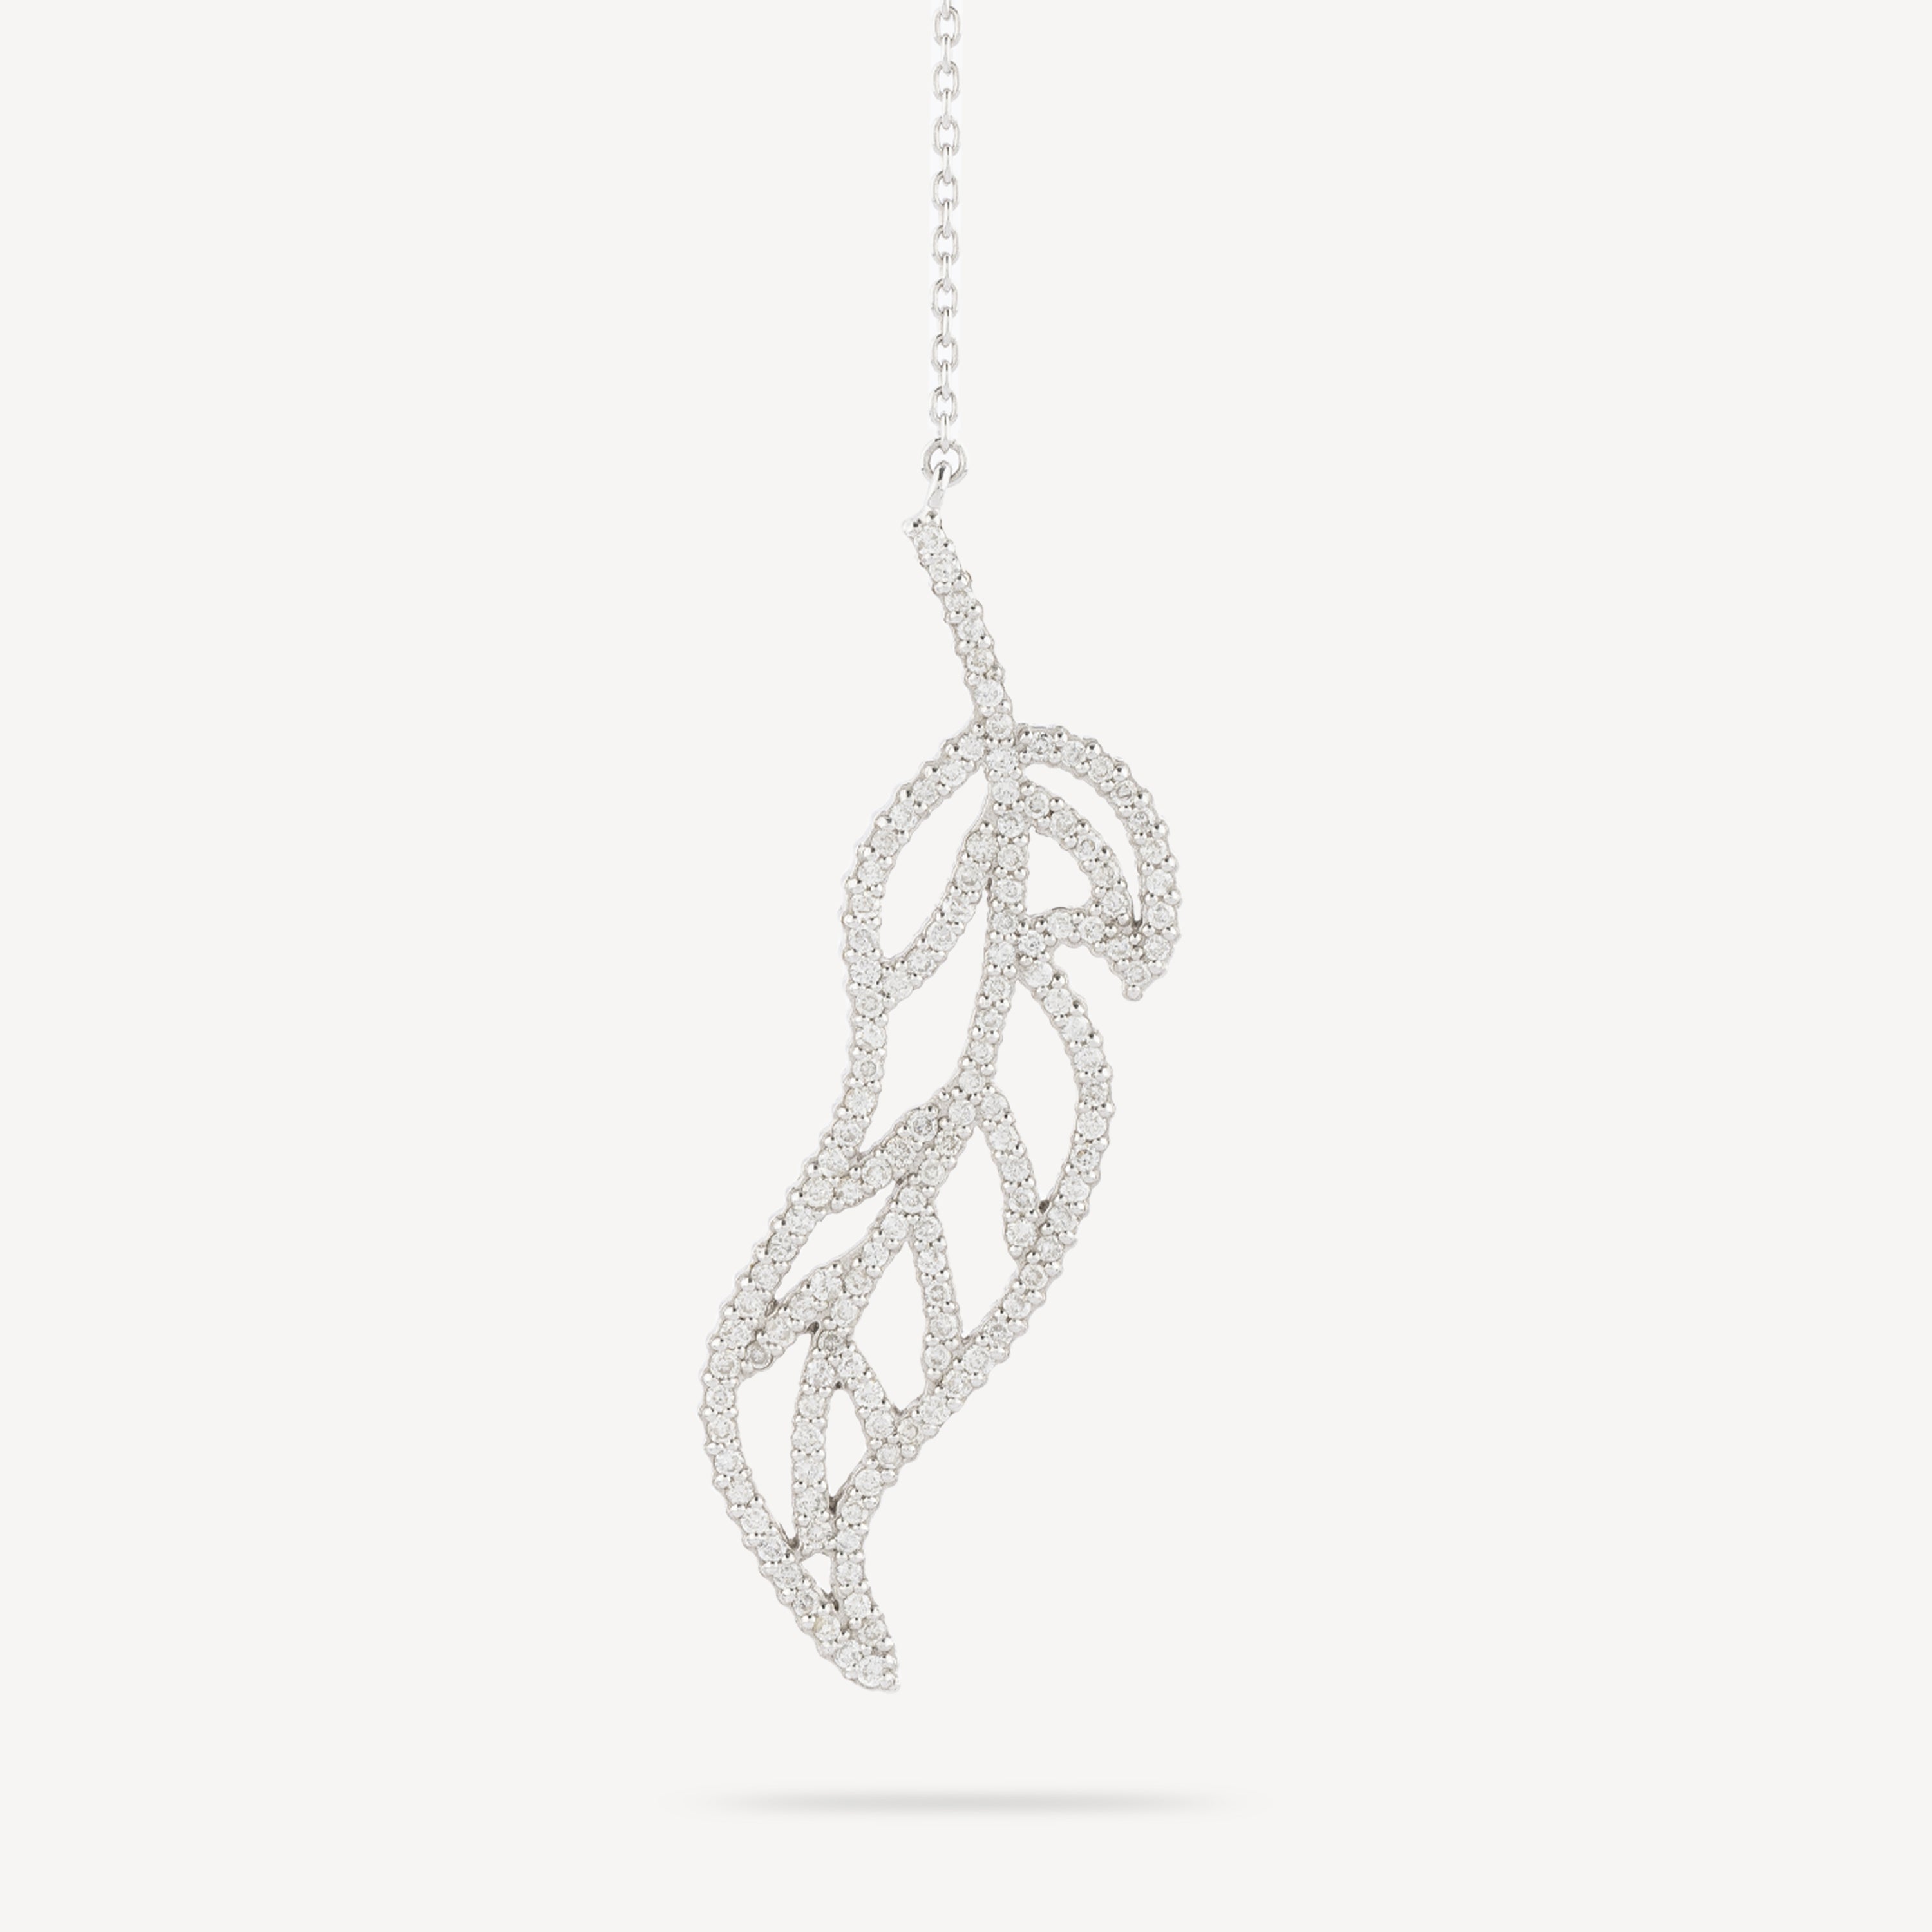 White gold leaf pendant necklace